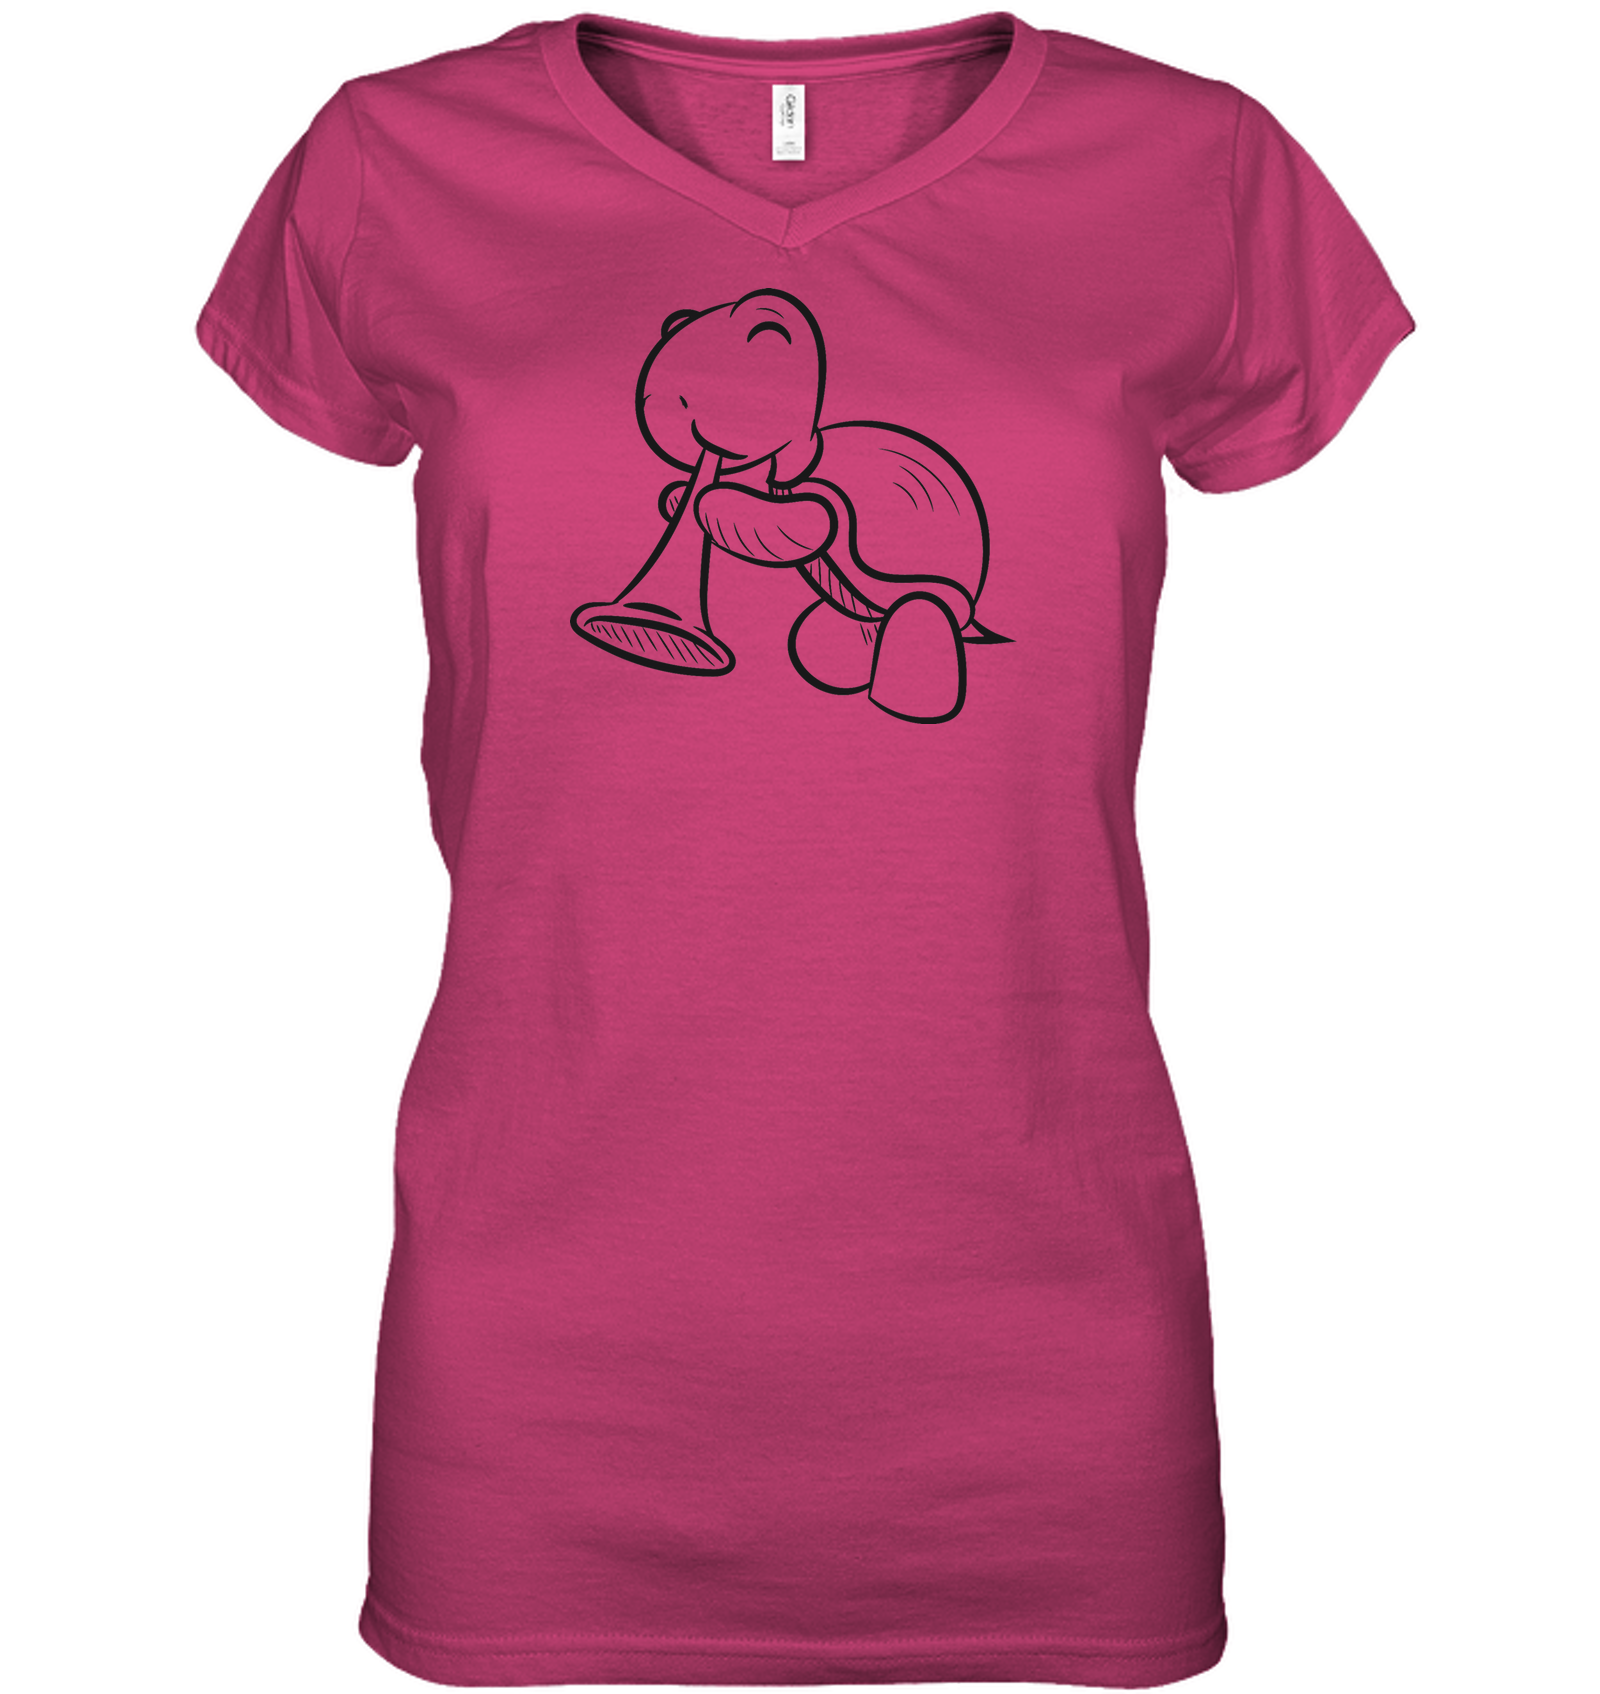 Turtle with Trumpet - Hanes Women's Nano-T® V-Neck T-Shirt